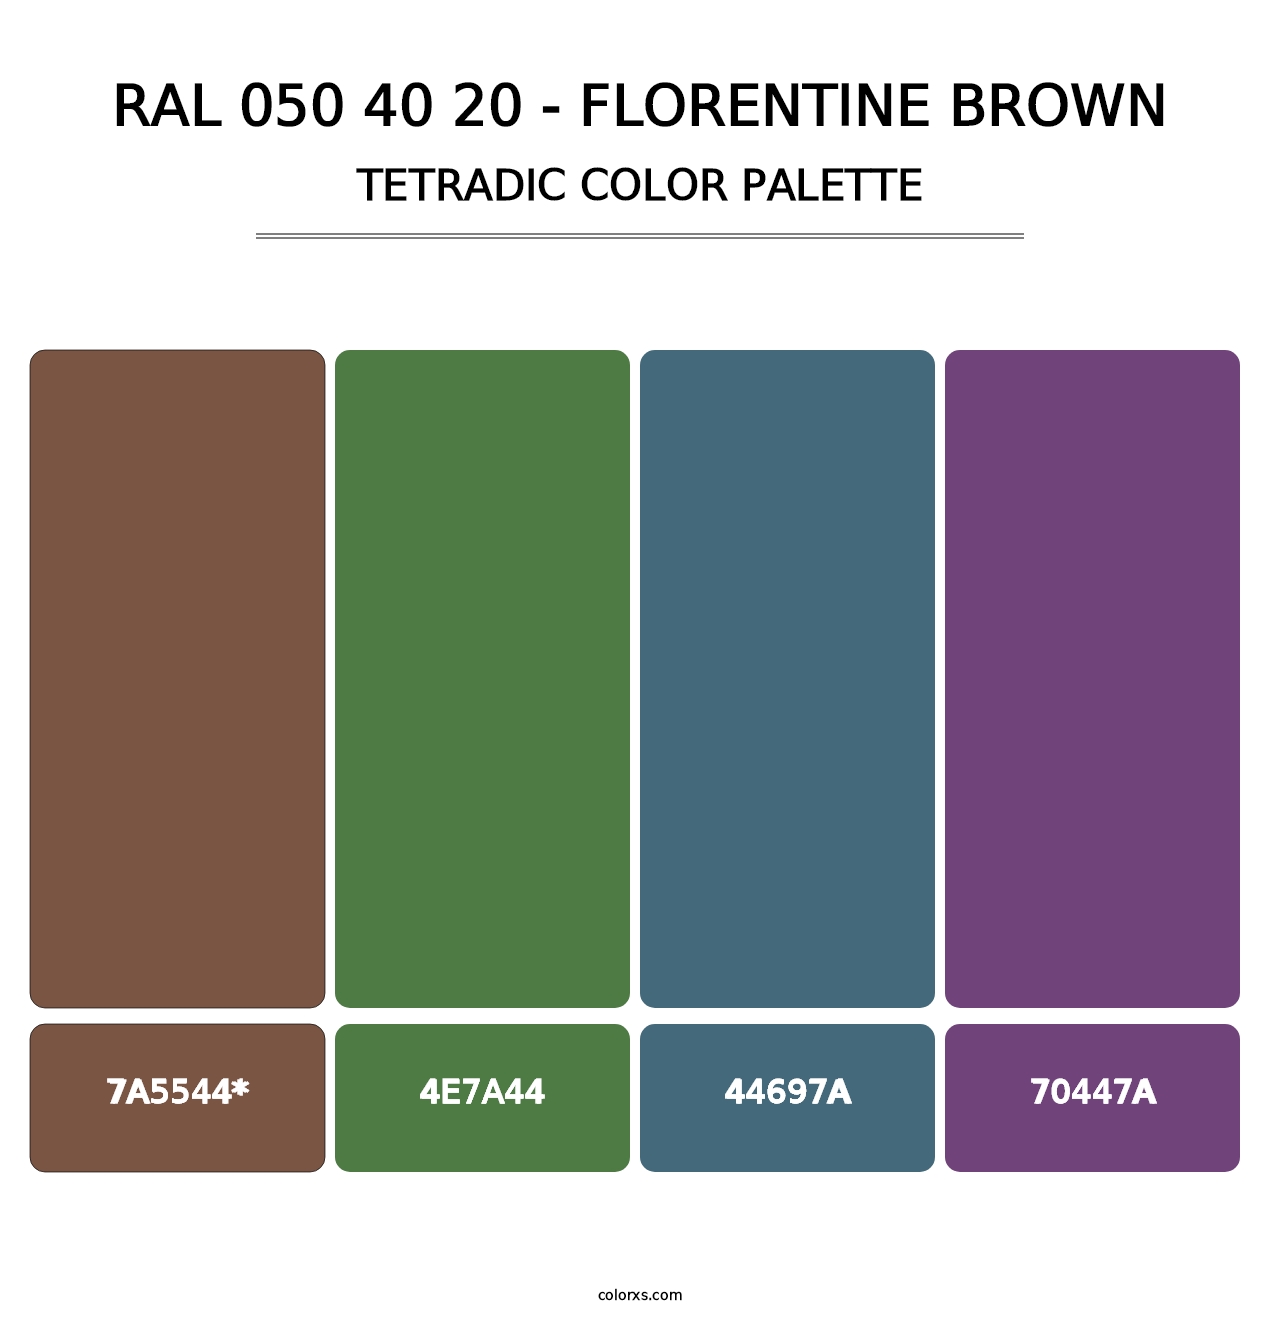 RAL 050 40 20 - Florentine Brown - Tetradic Color Palette